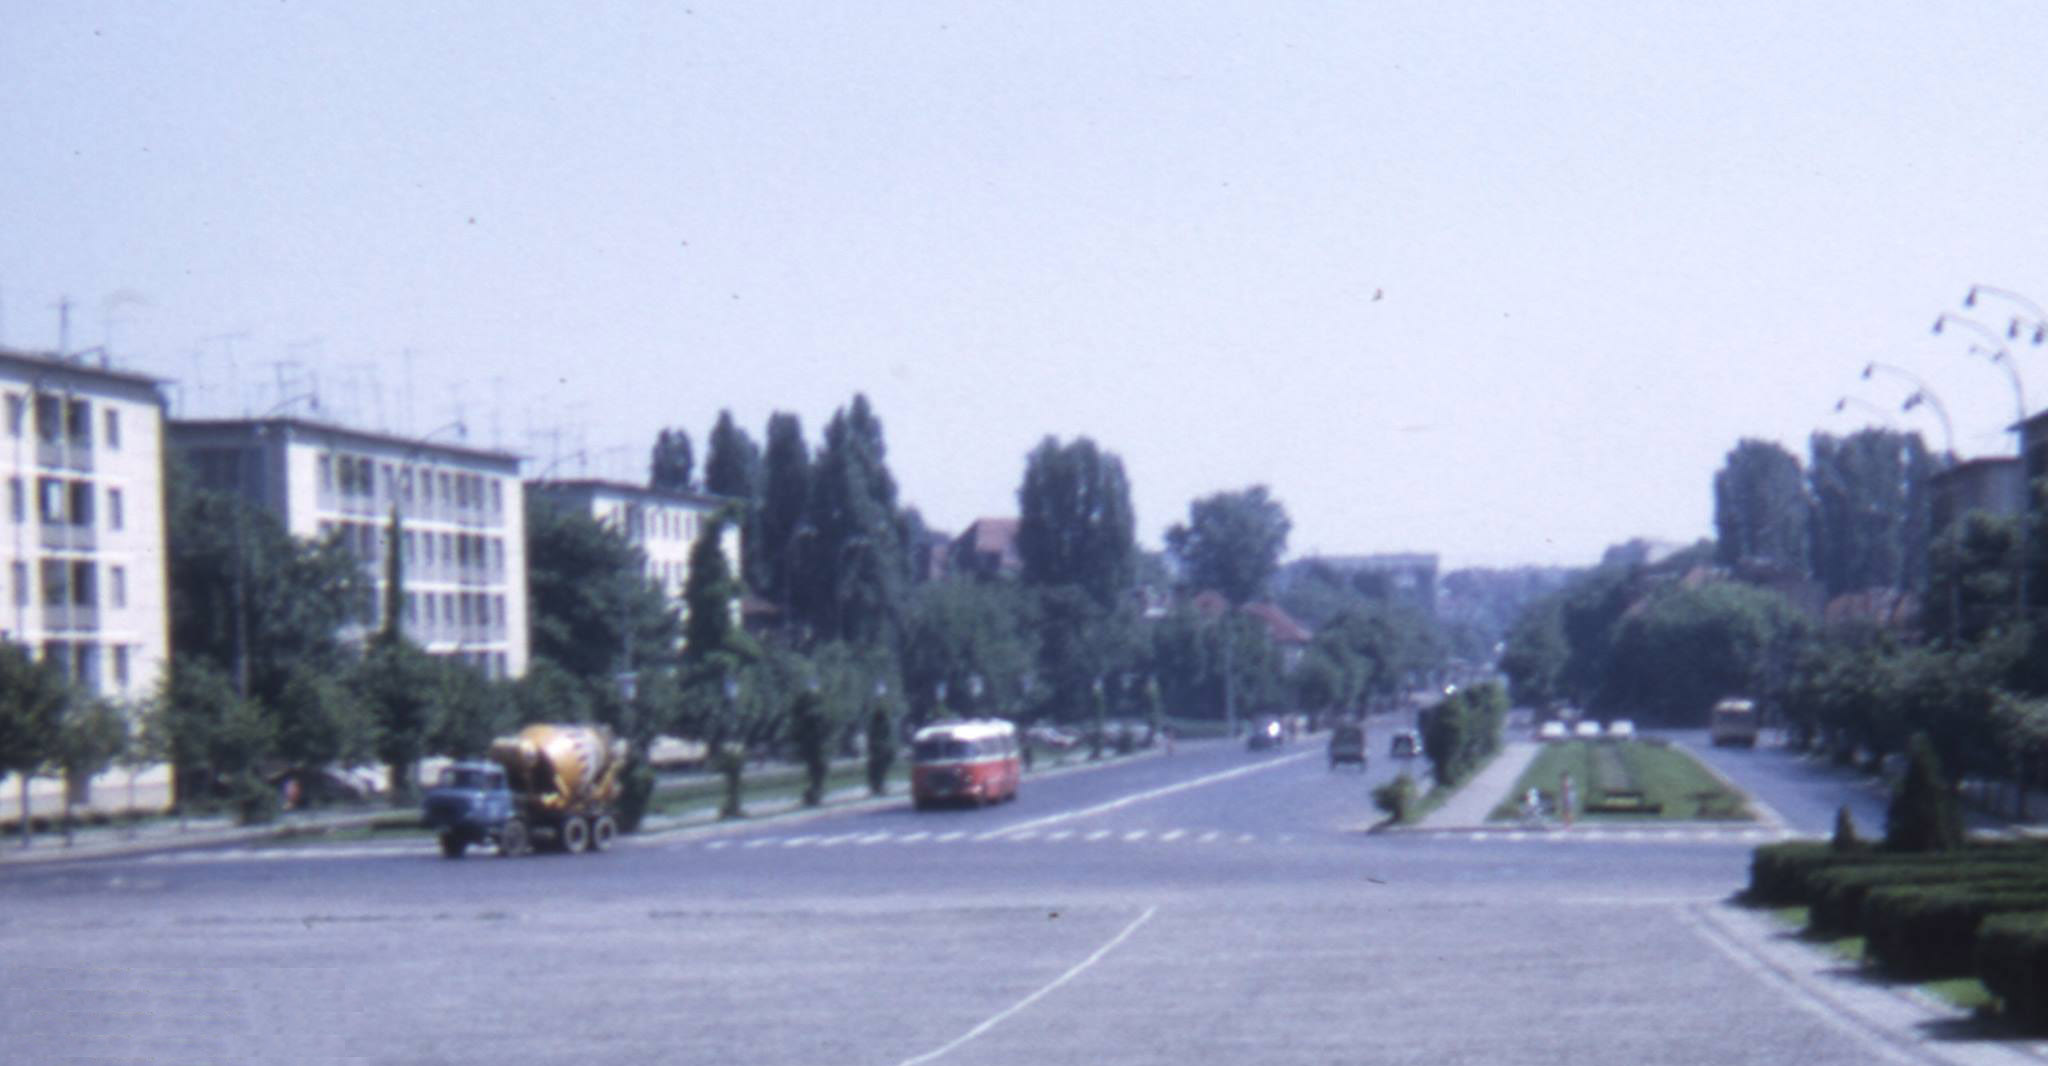 imagini fotografii poze platou academia militara cartier cotroceni 1971